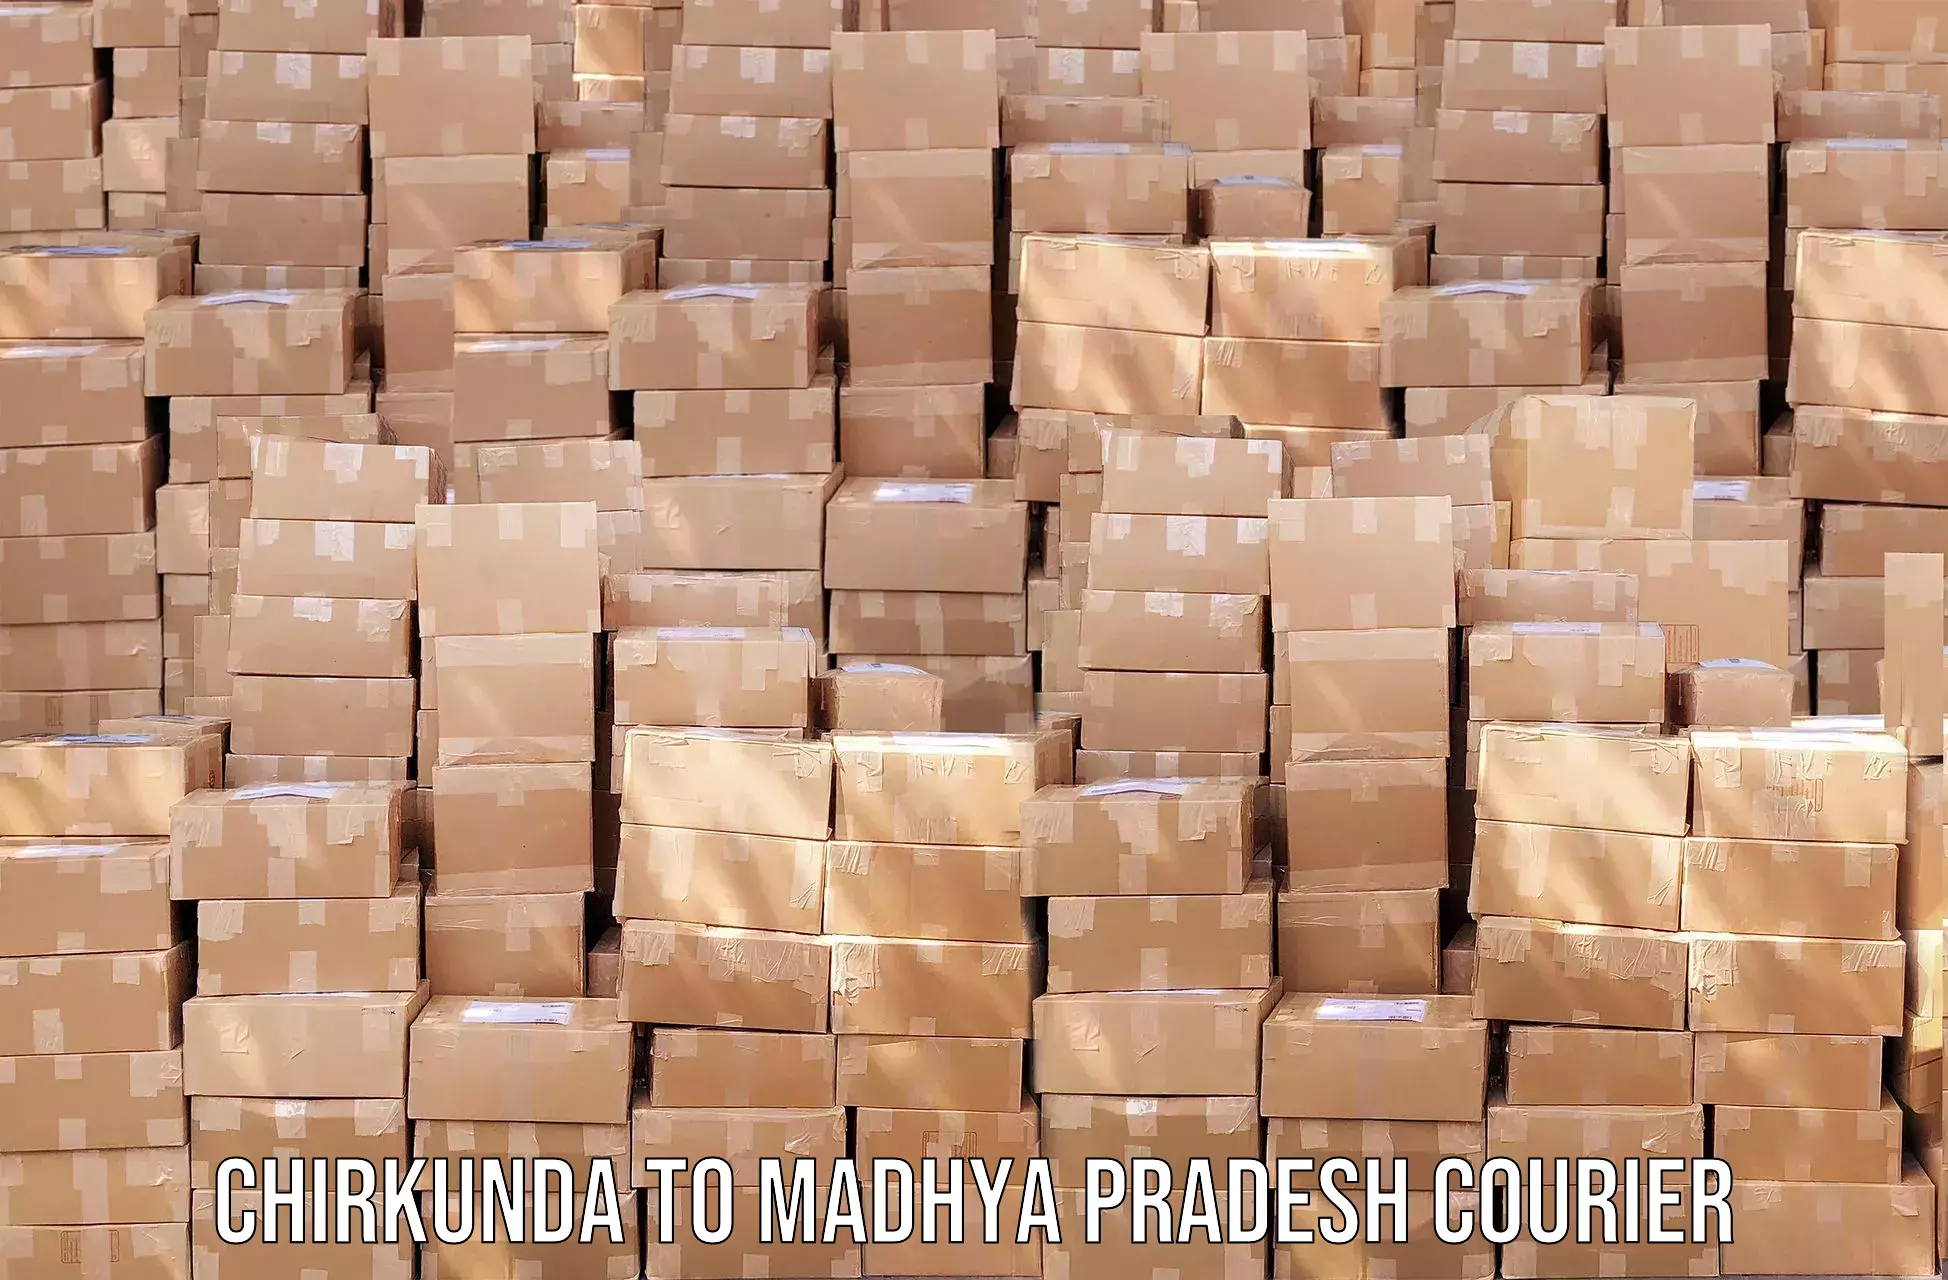 Bulk courier orders in Chirkunda to Madhya Pradesh